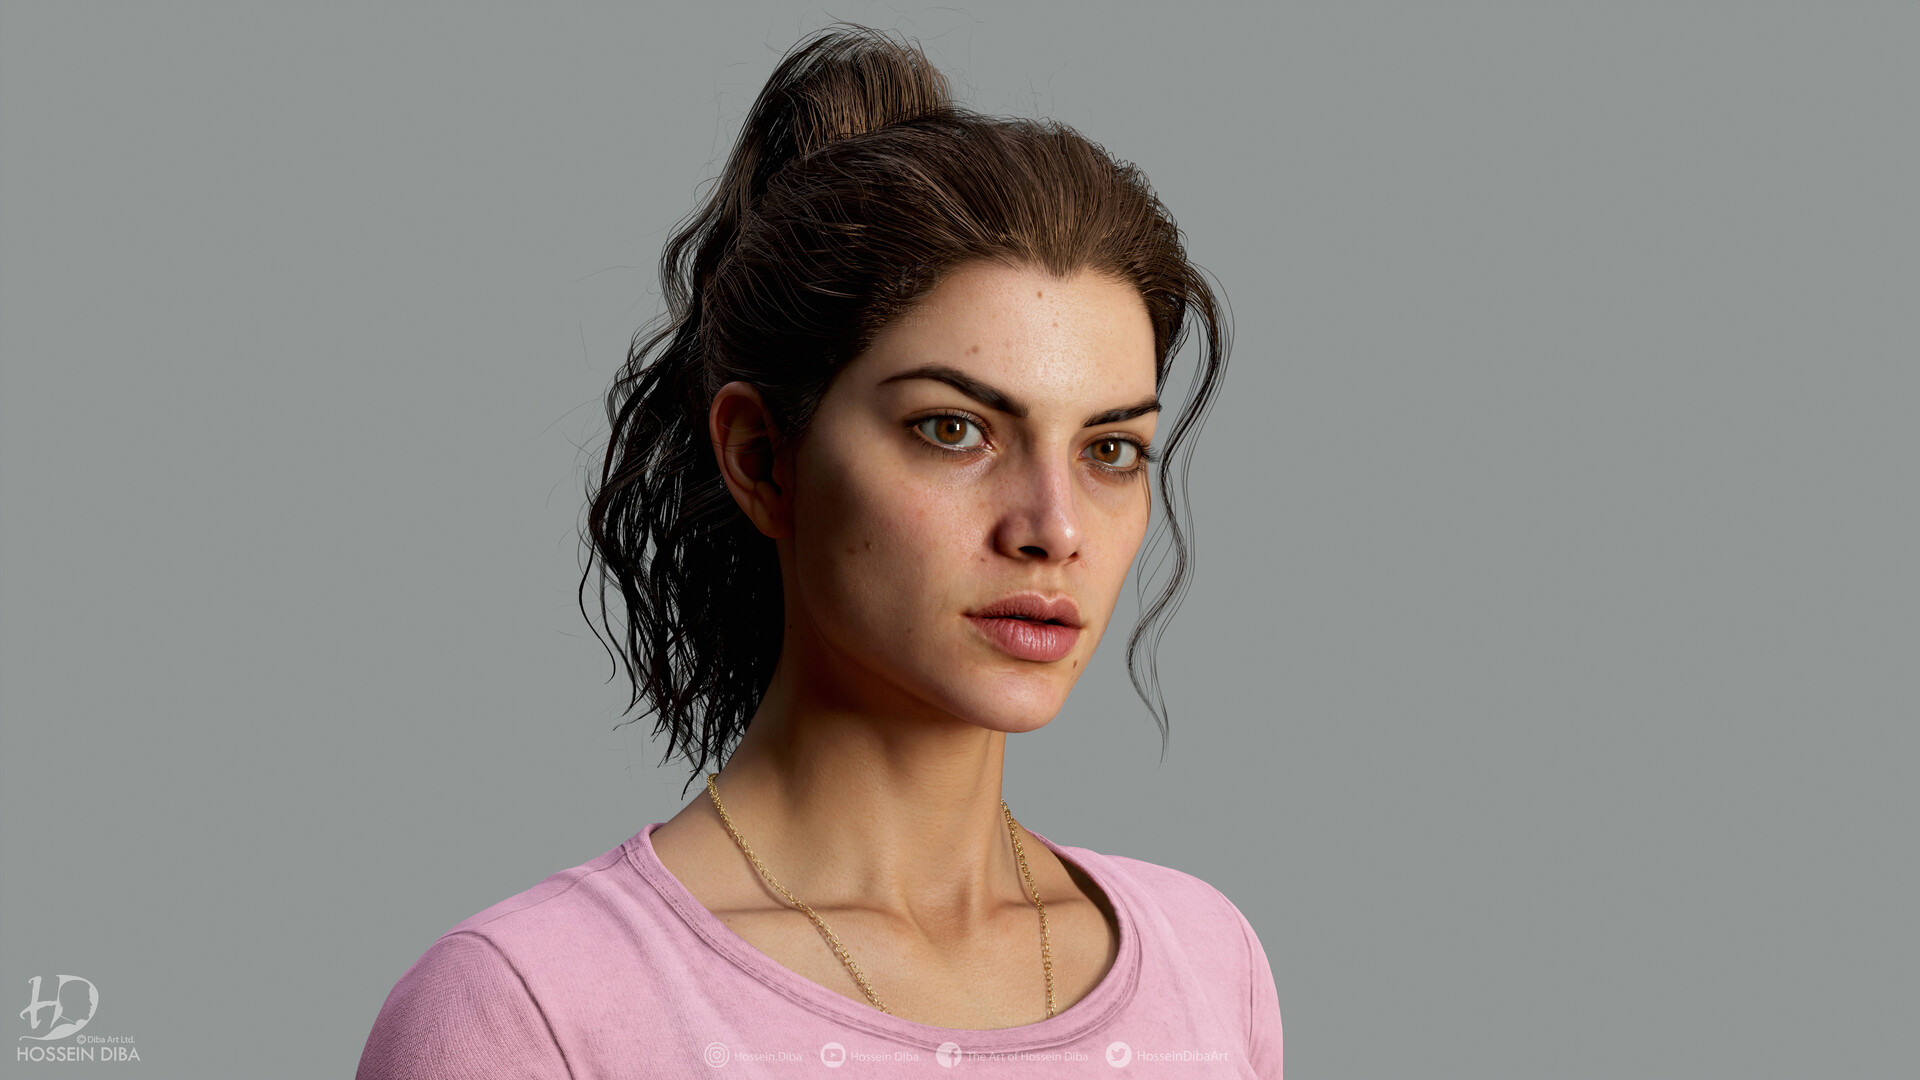 GTA VI' Character Lucia Focus of Transphobic 'Anti-Woke' Theory